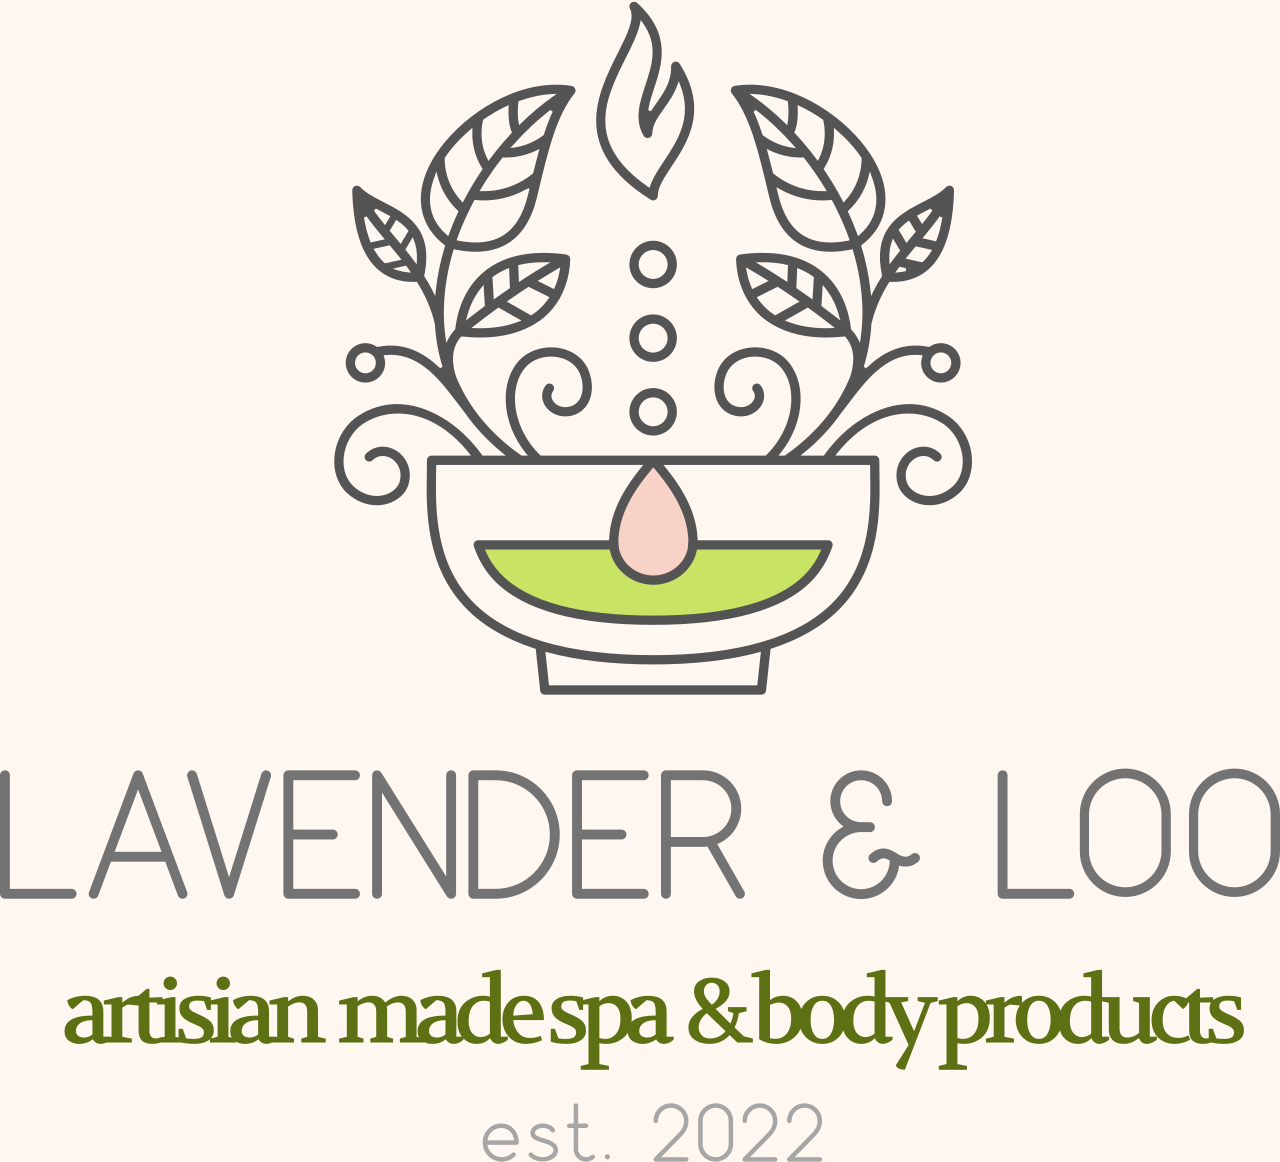 LAVENDER & LOO's logo